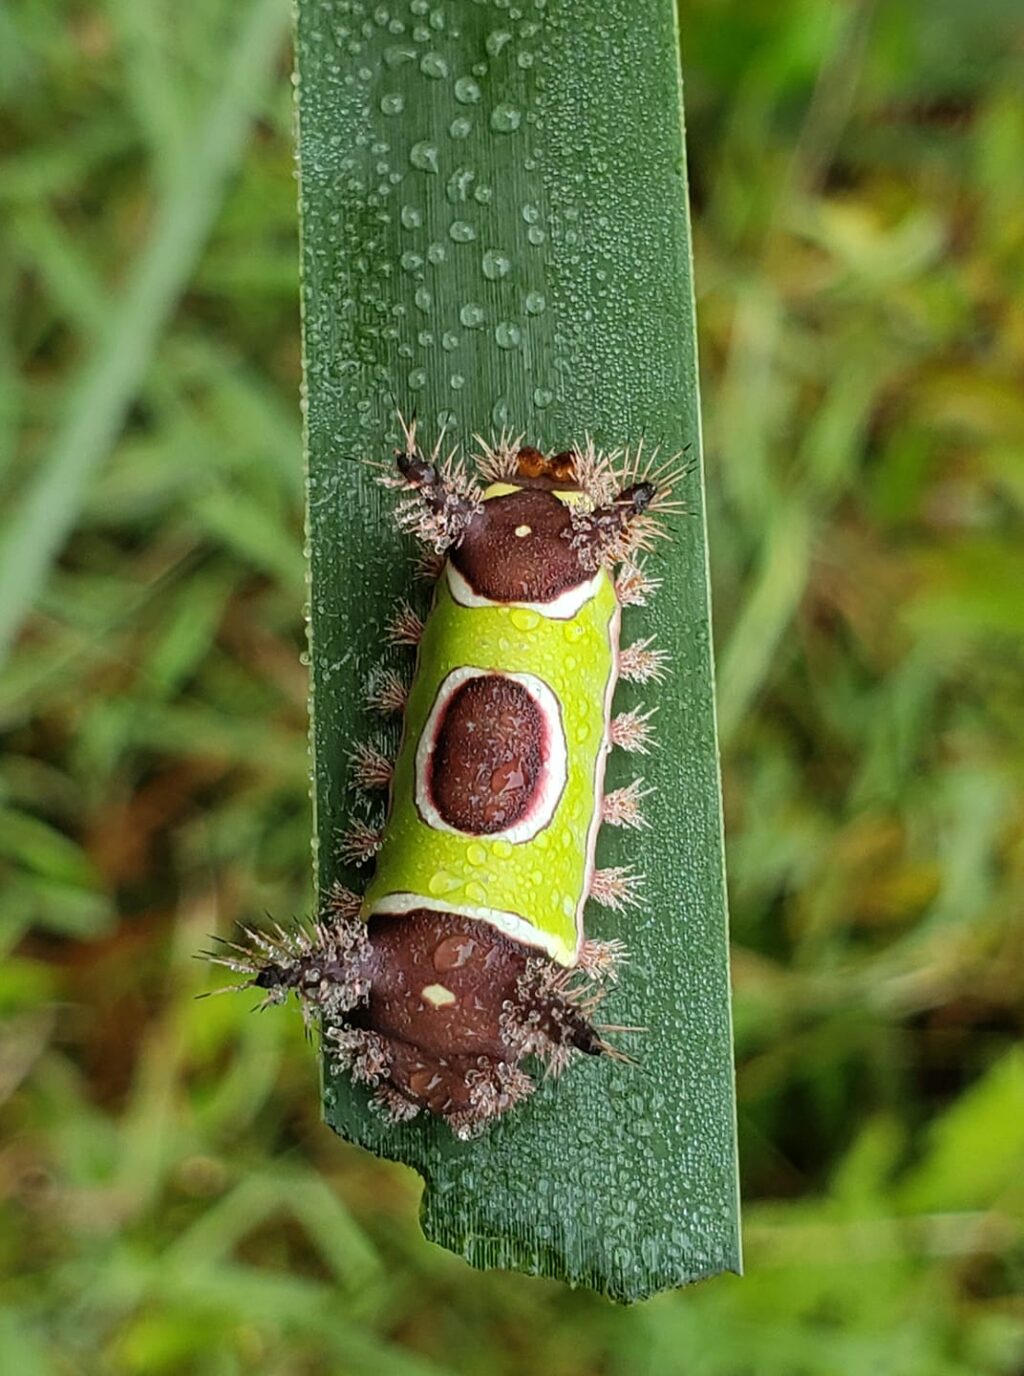 Image of a saddleback caterpillar